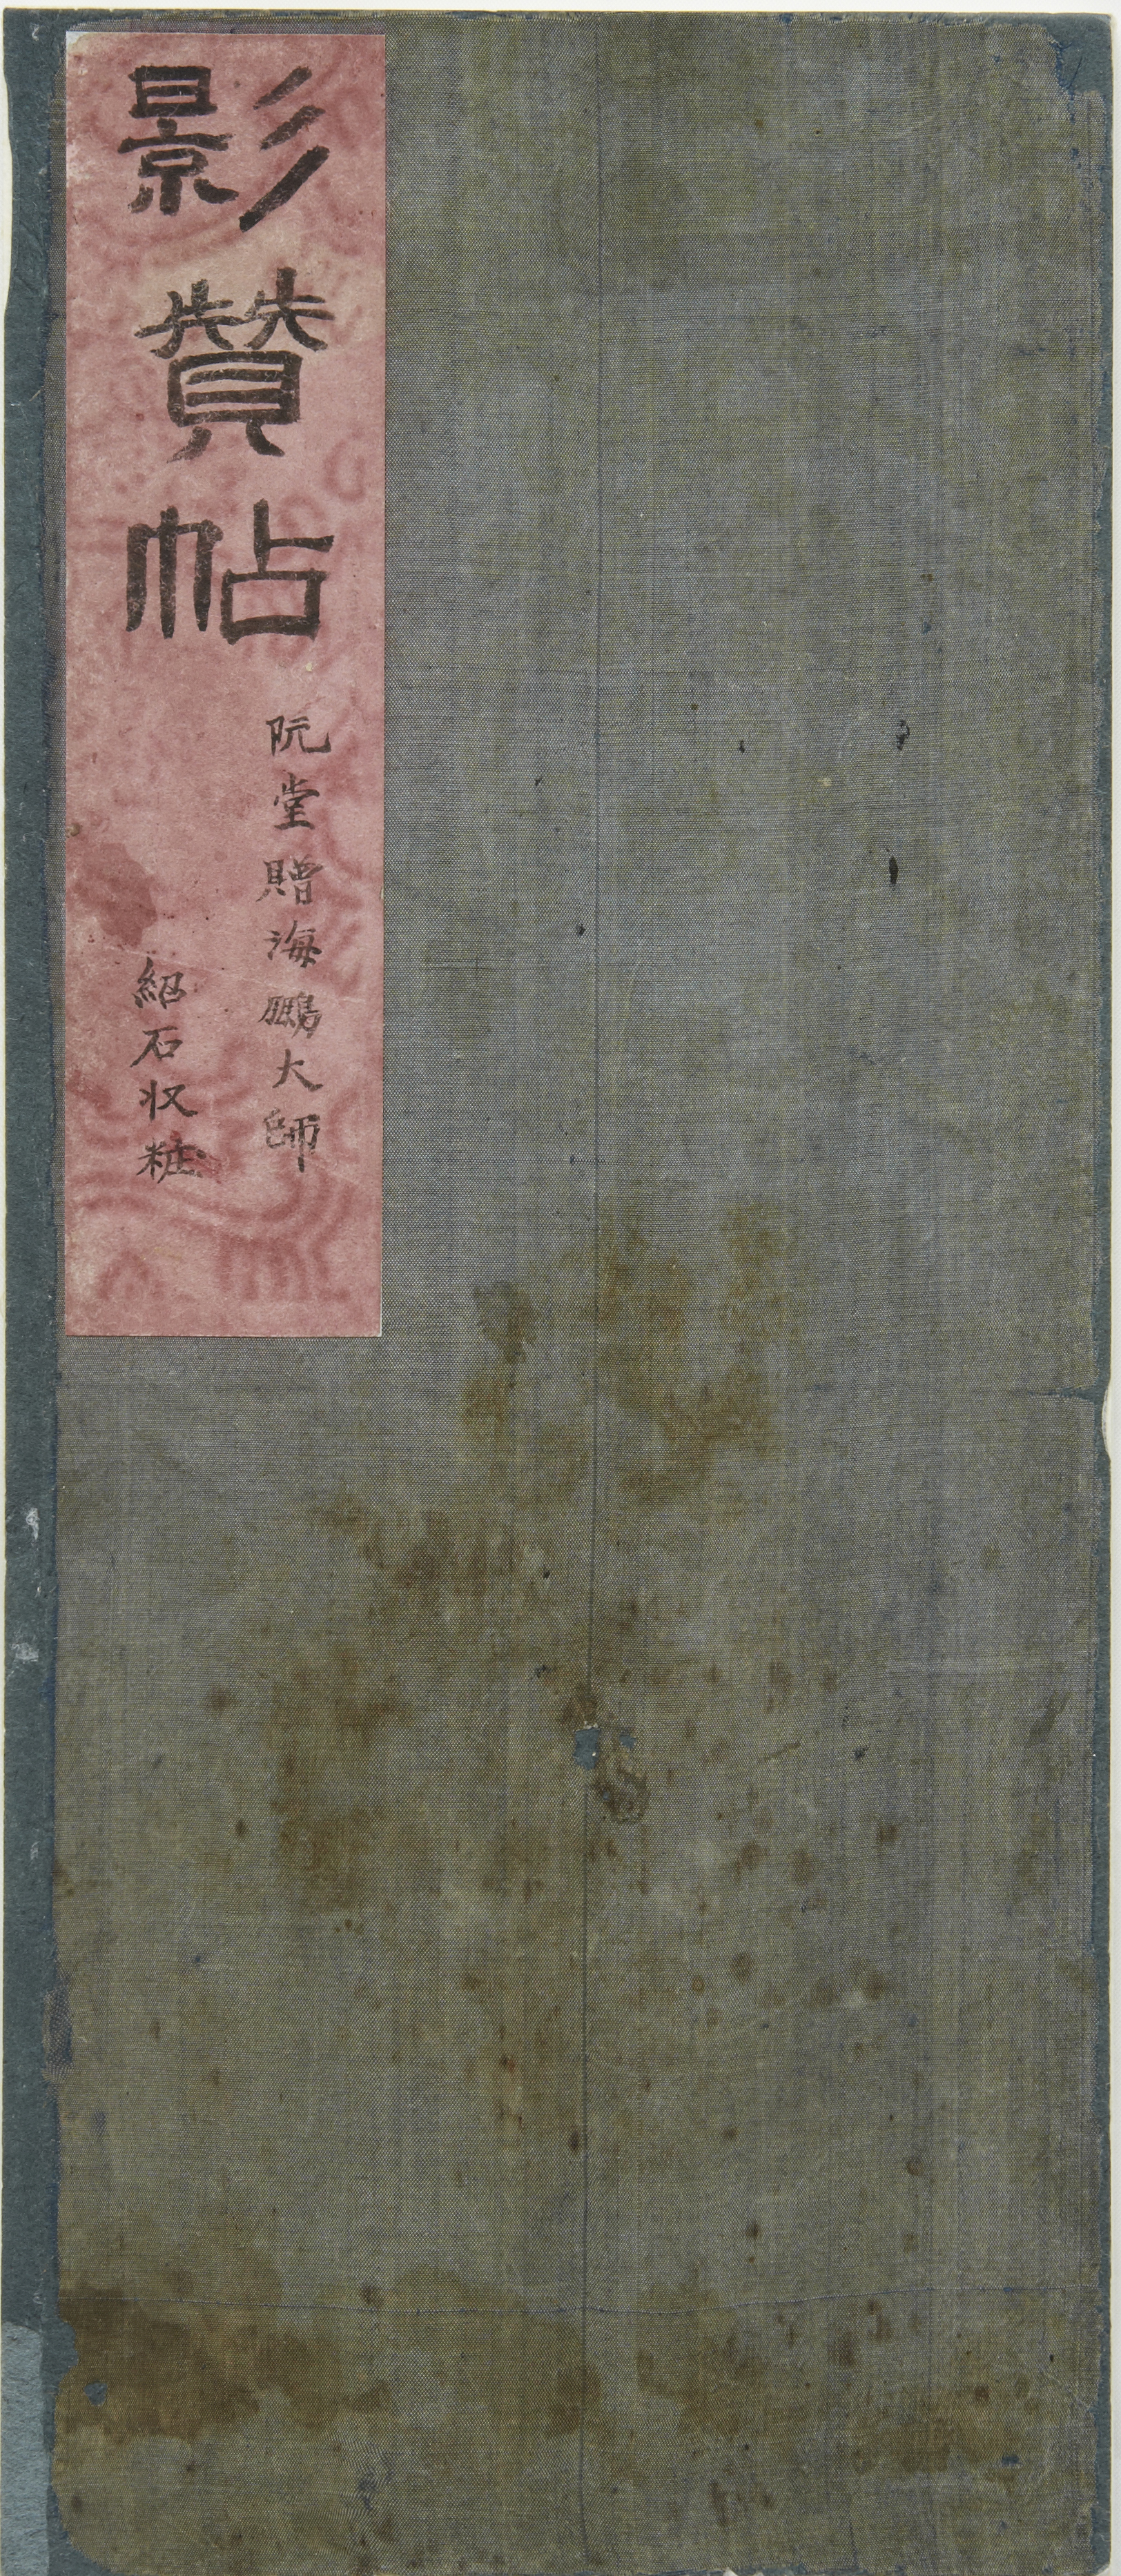 Chusa (秋史) Jeong-hui Kim (金正喜, 1786~1856), Jaehaebungdaesayoung 題海鵬大師影, 1856, ink on paper  紙本墨書, 28x12cm